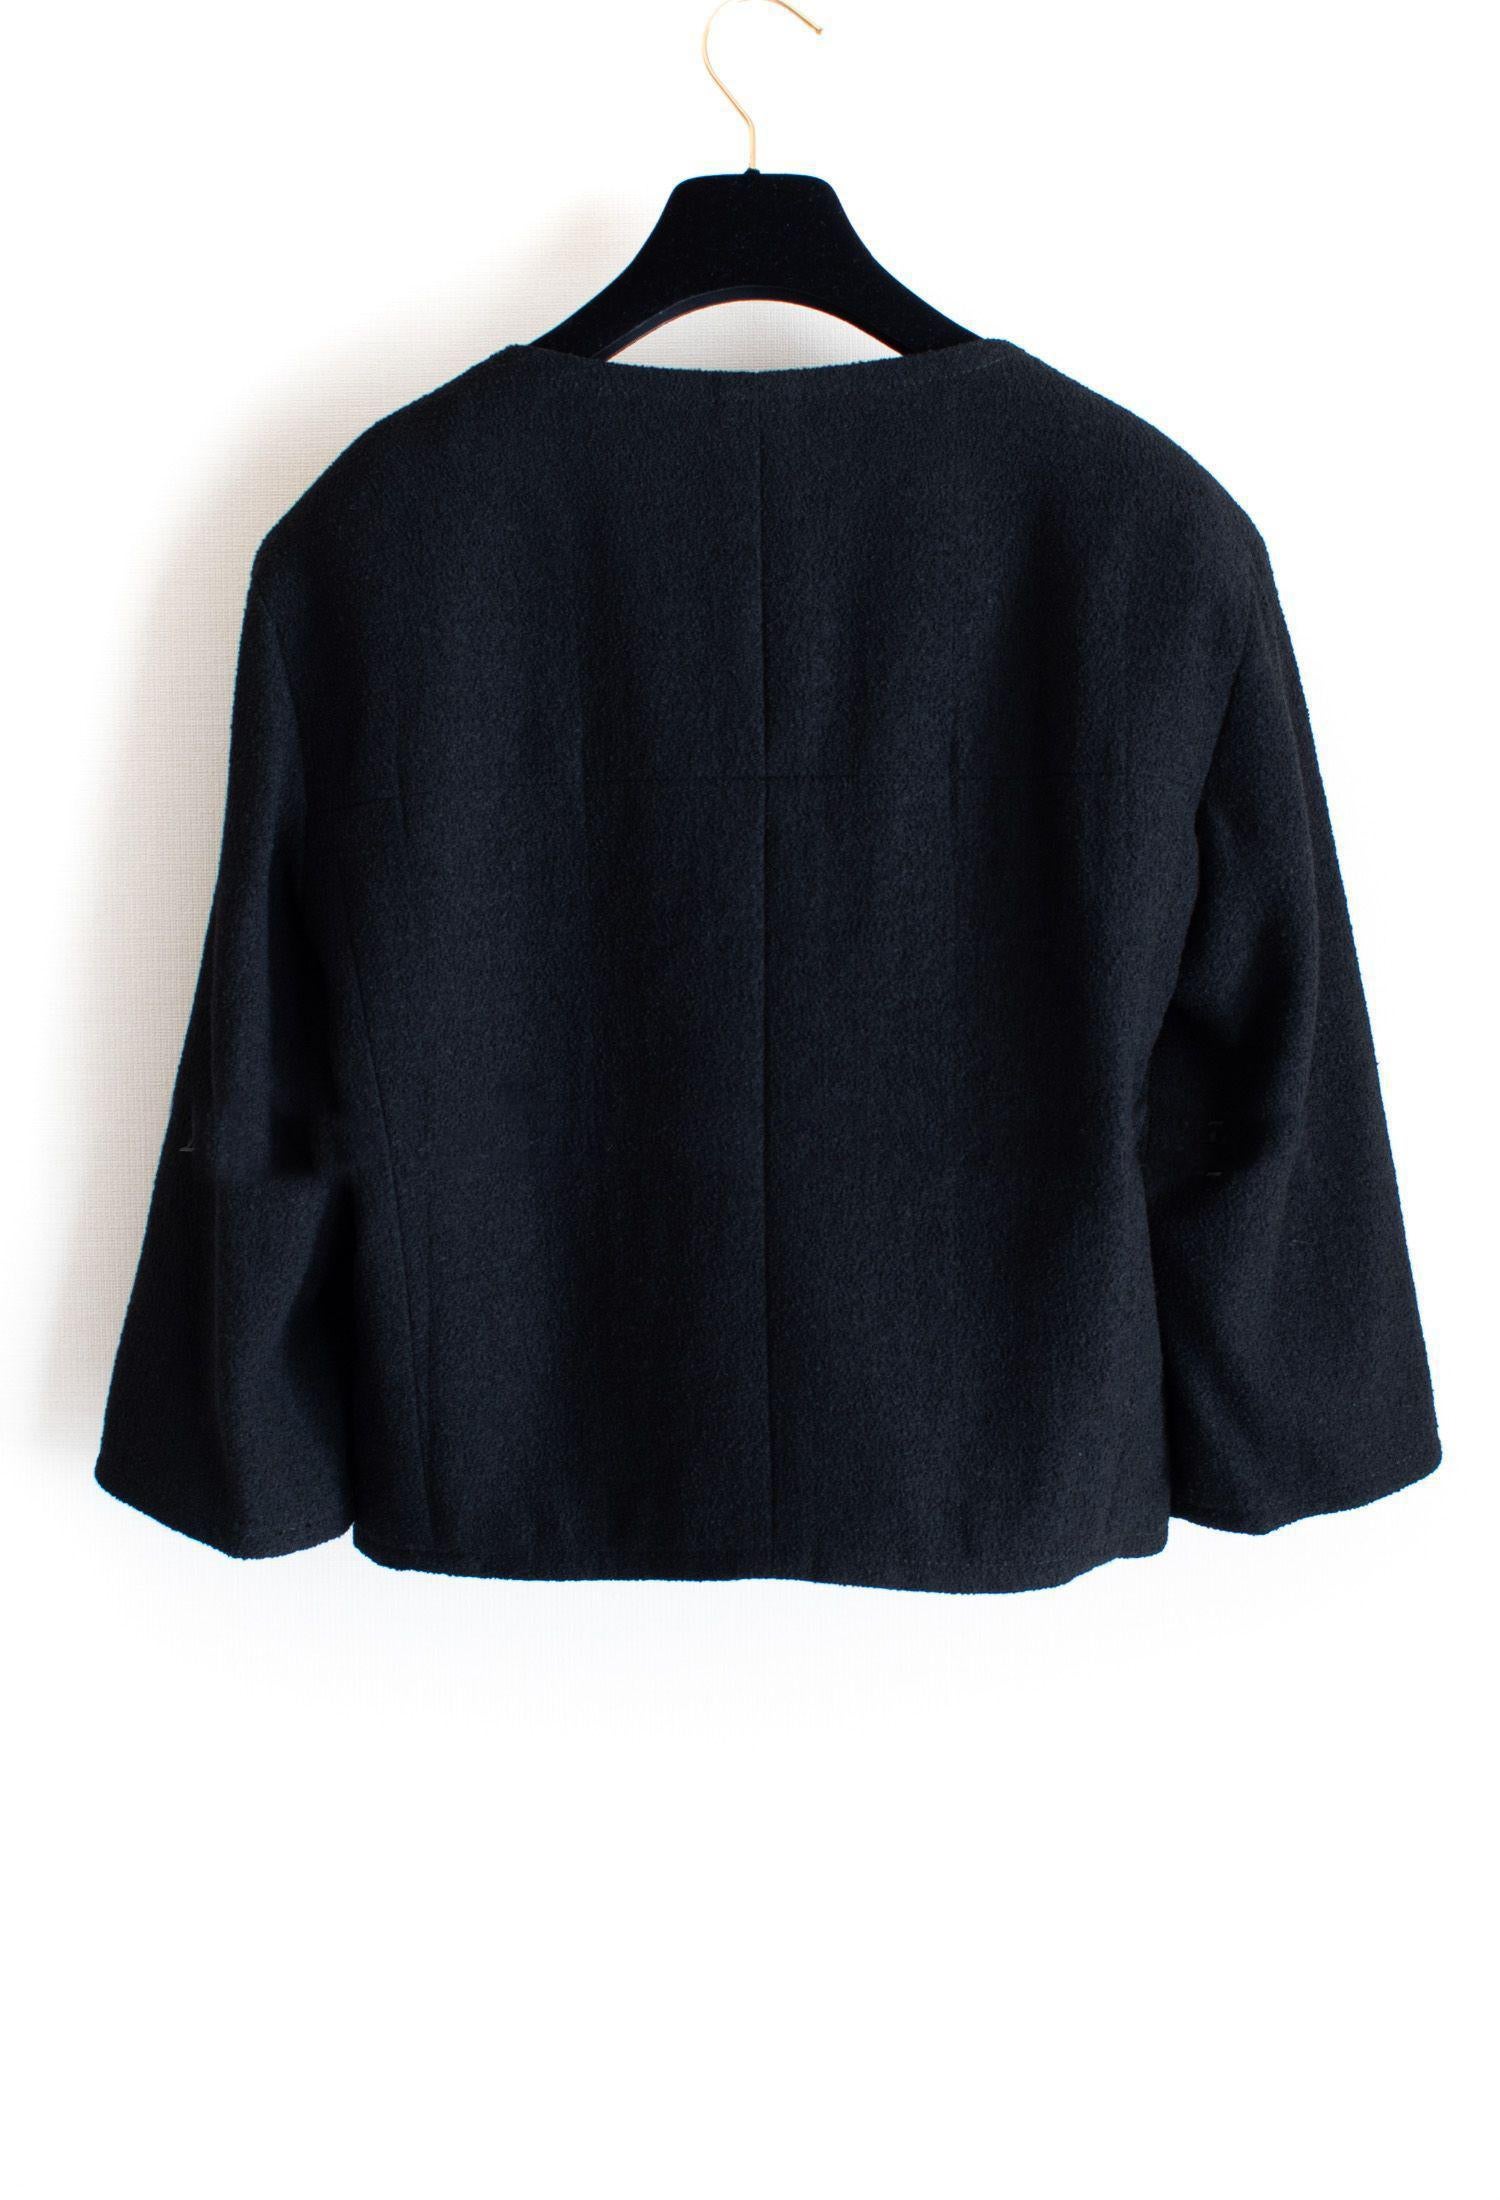 Chanel Paris/Singapore Black Tweed Jacket 2